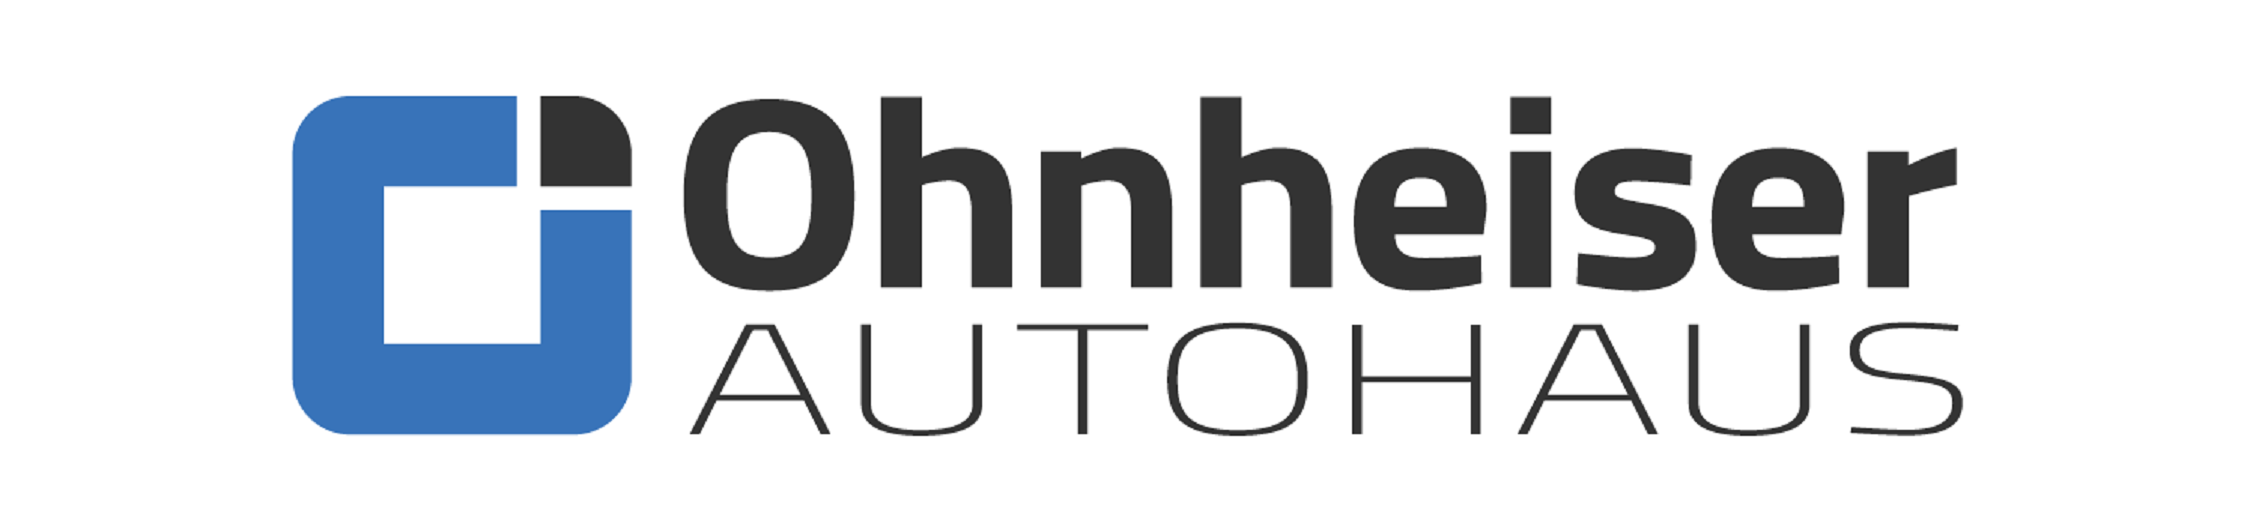 Autohaus Ohnheiser GmbH & Co. KG